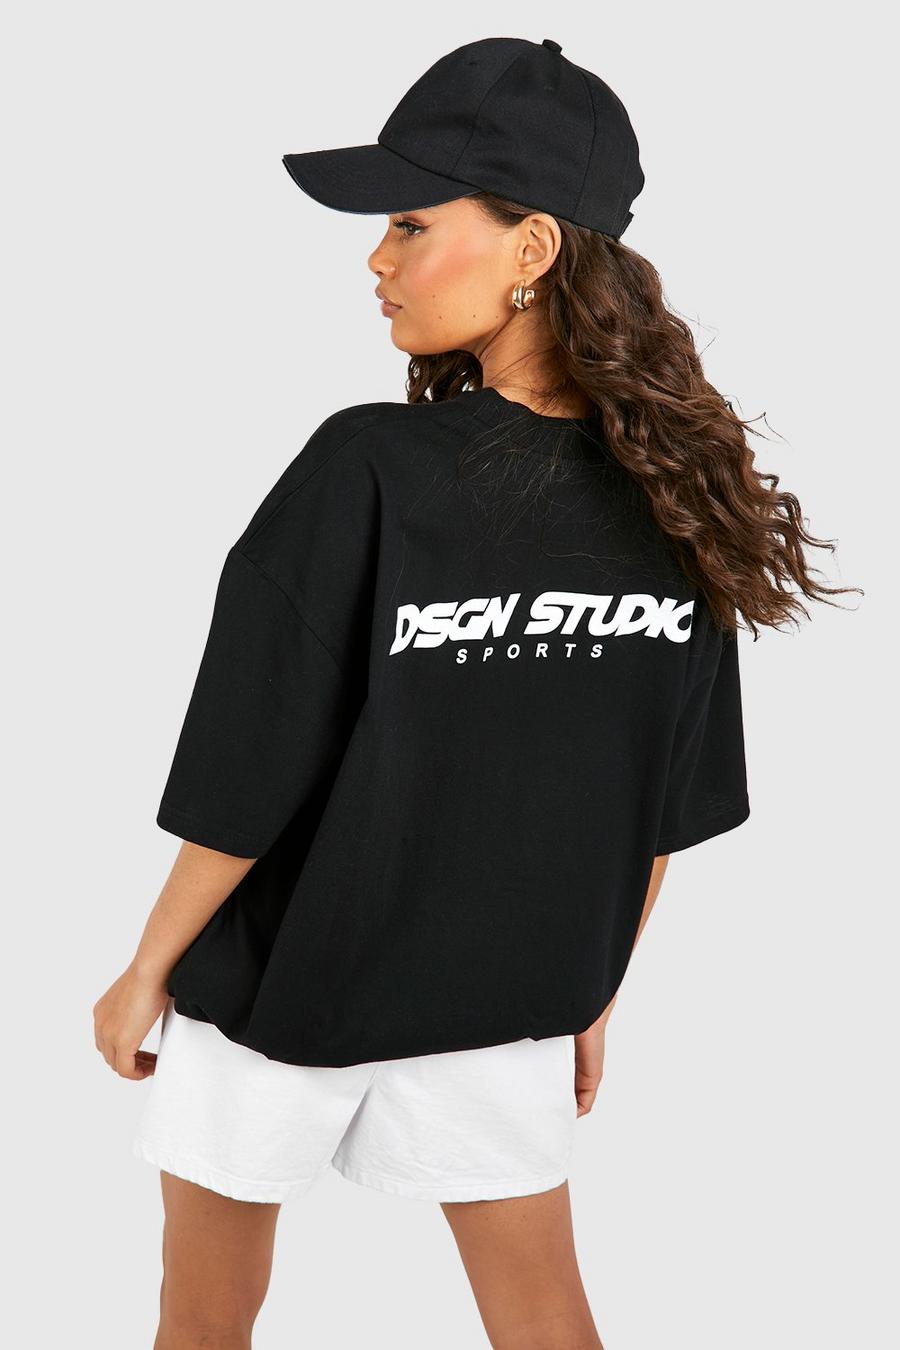 Camiseta oversize con eslogan deportivo Dsgn Studio, Black